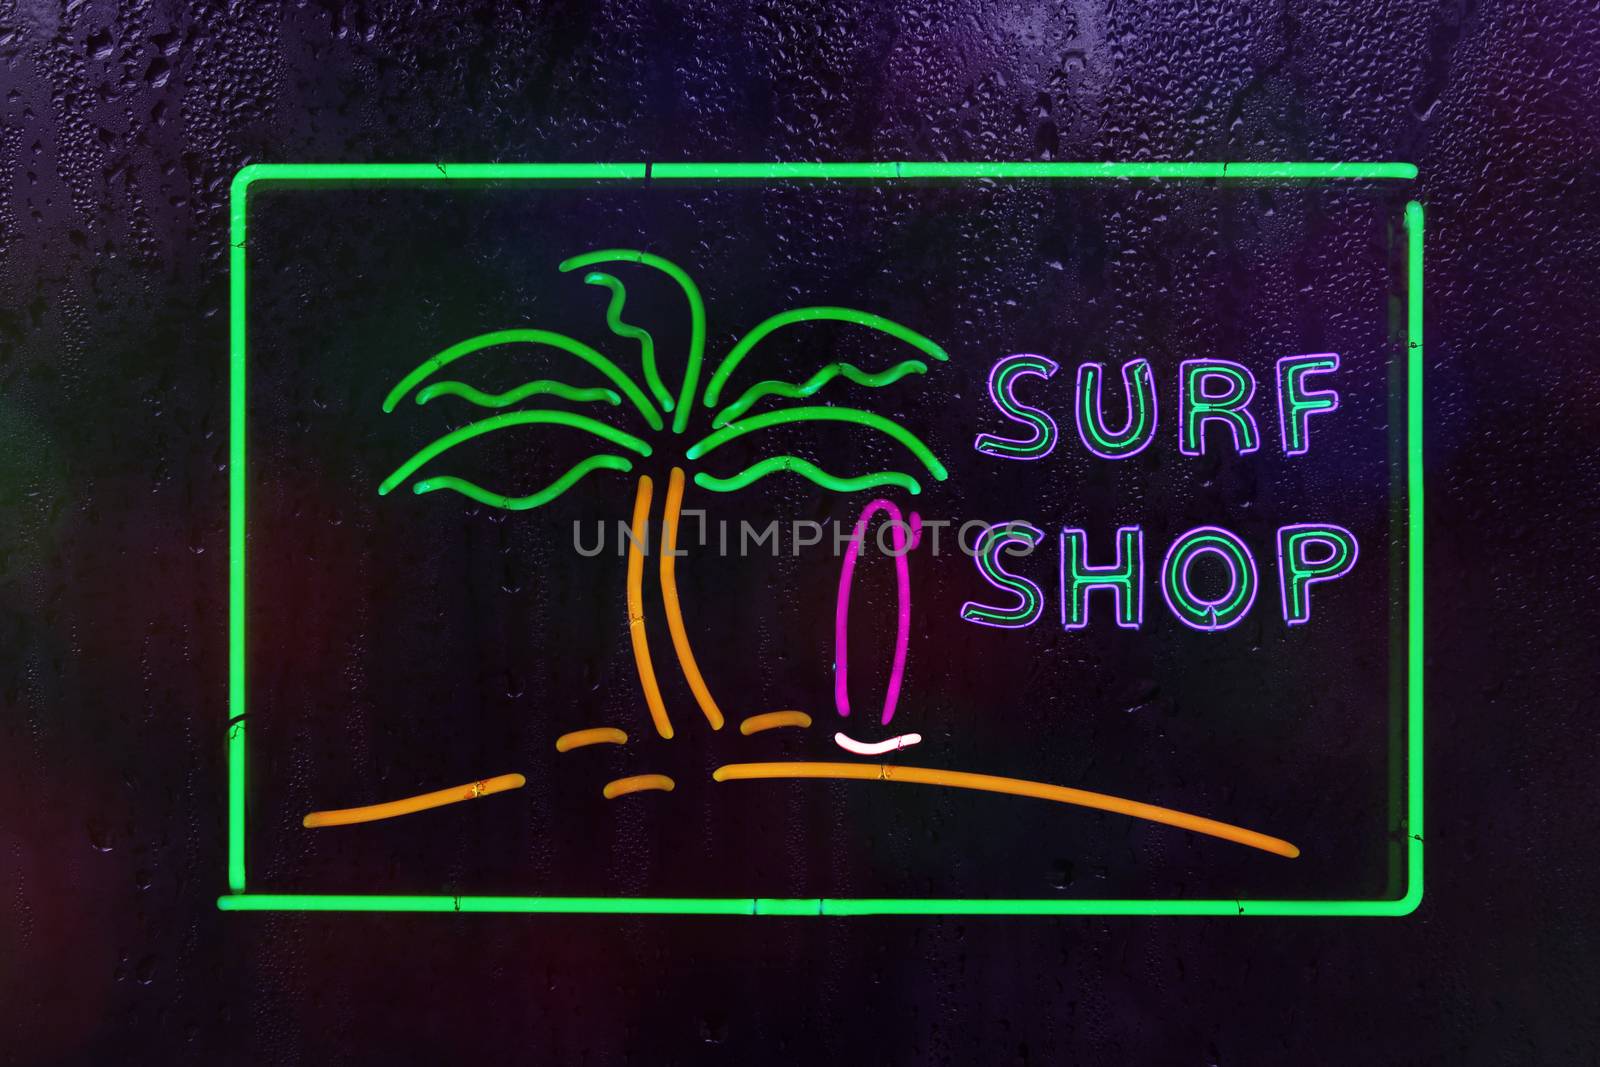 Neon Surf Shop Sign in Rainy Window Photo Composite Image